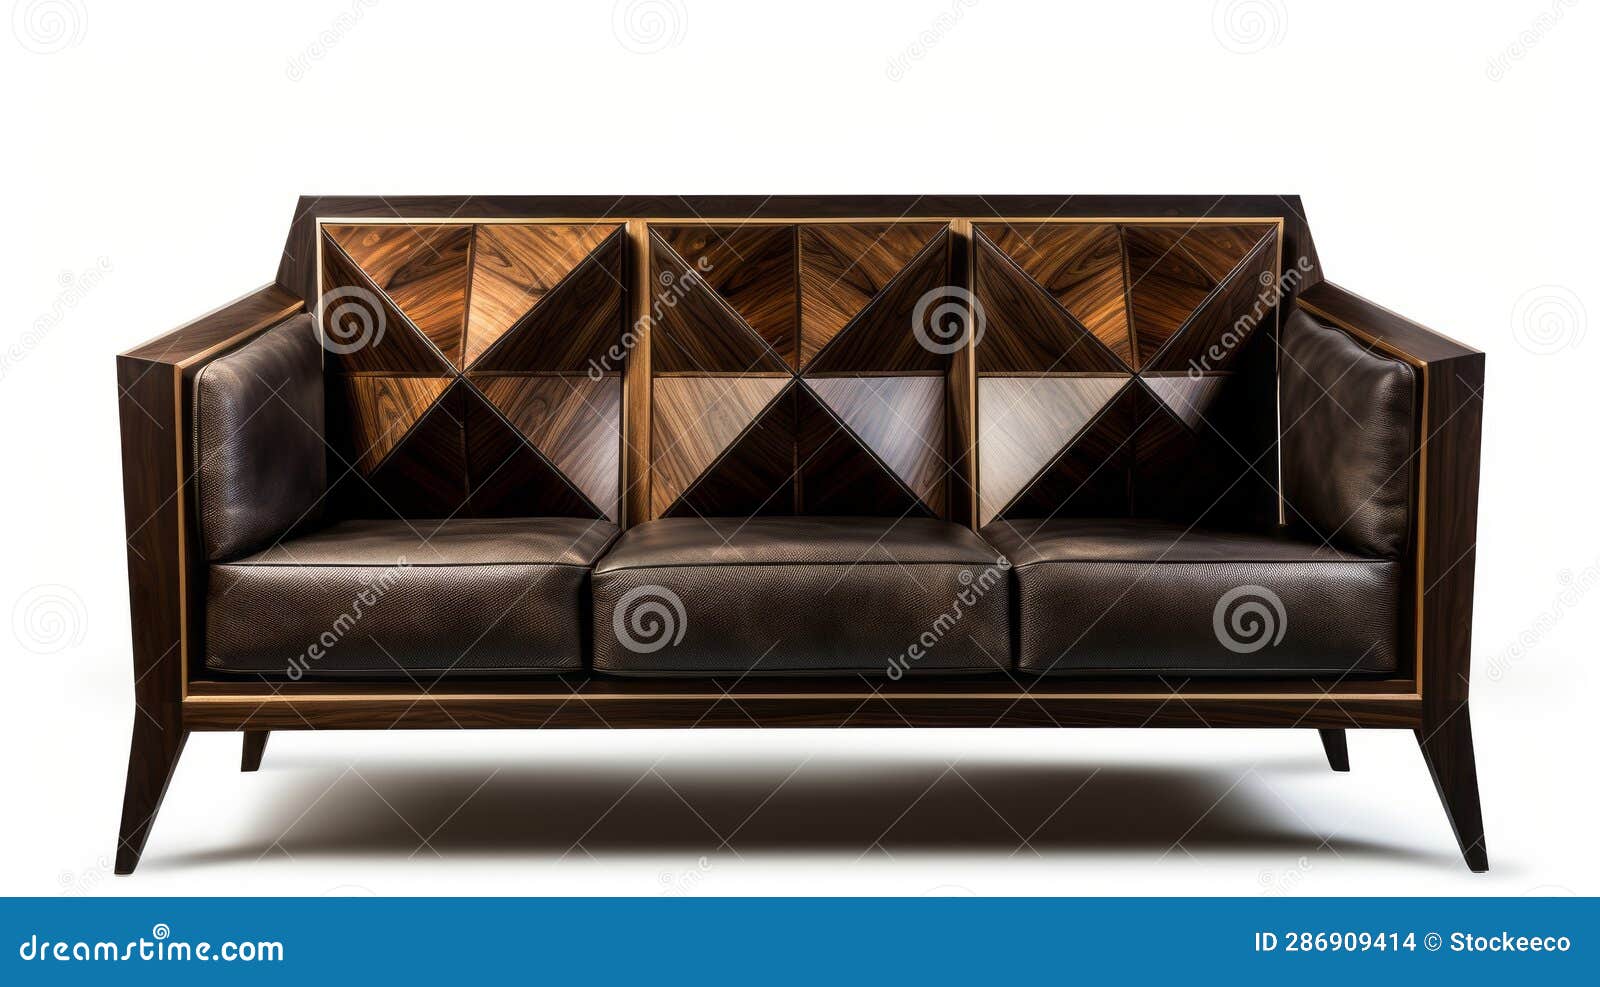 modern dark wood sofa with geometric symmetry and black leather